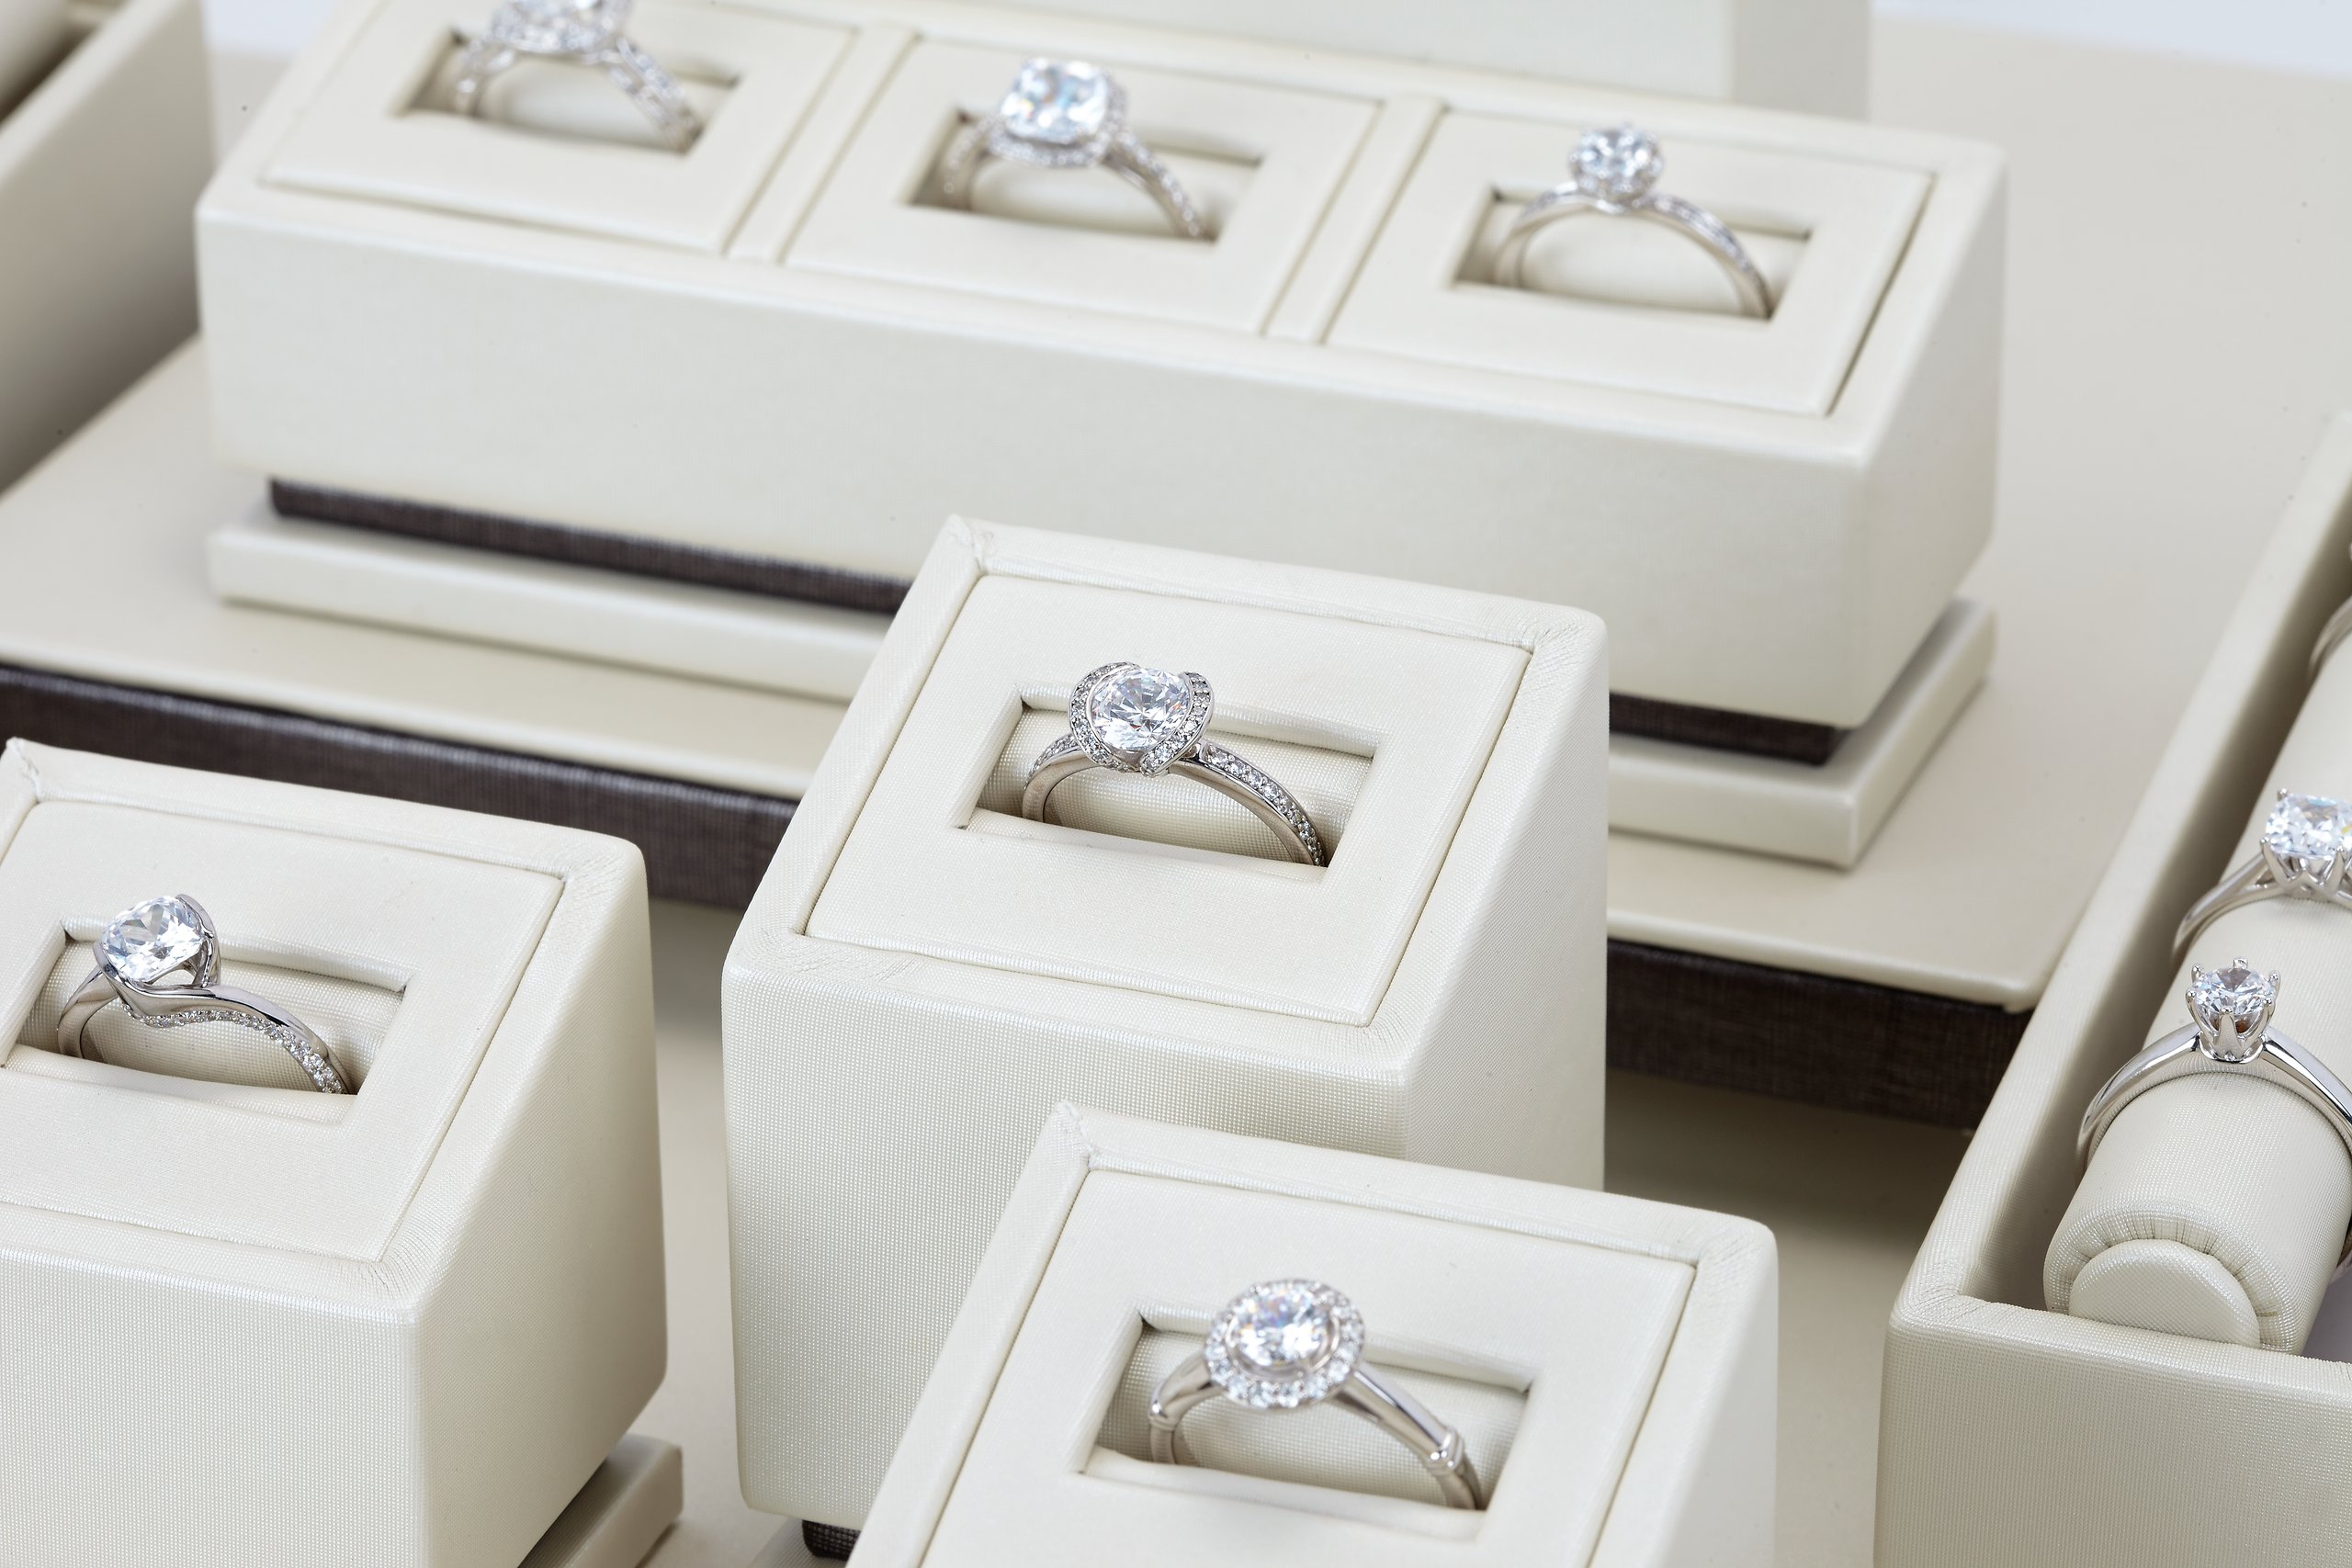 customizable engagement rings